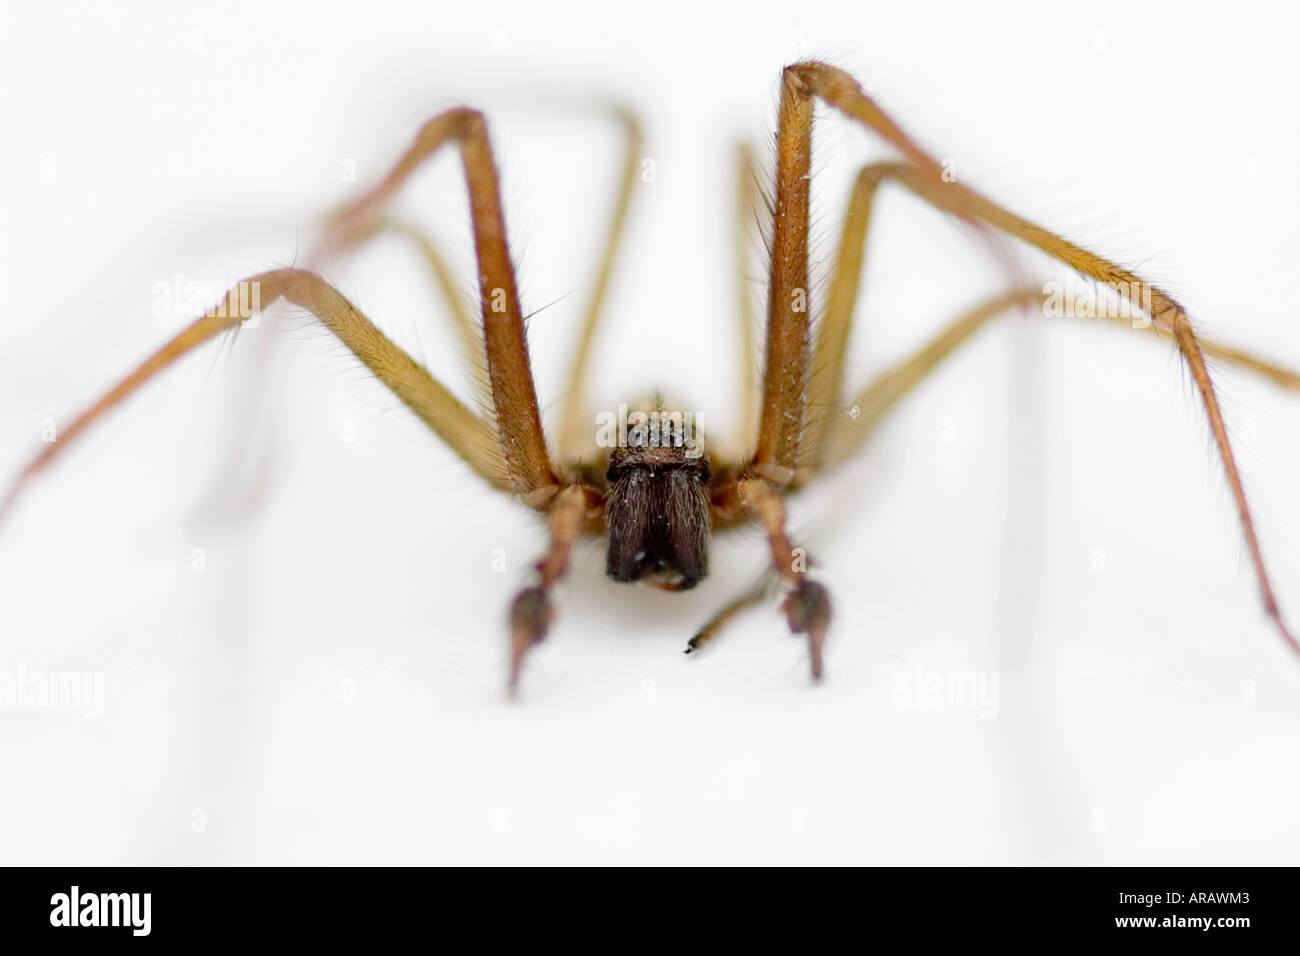 Eratigena atrica. Giant House spider against white background Stock Photo